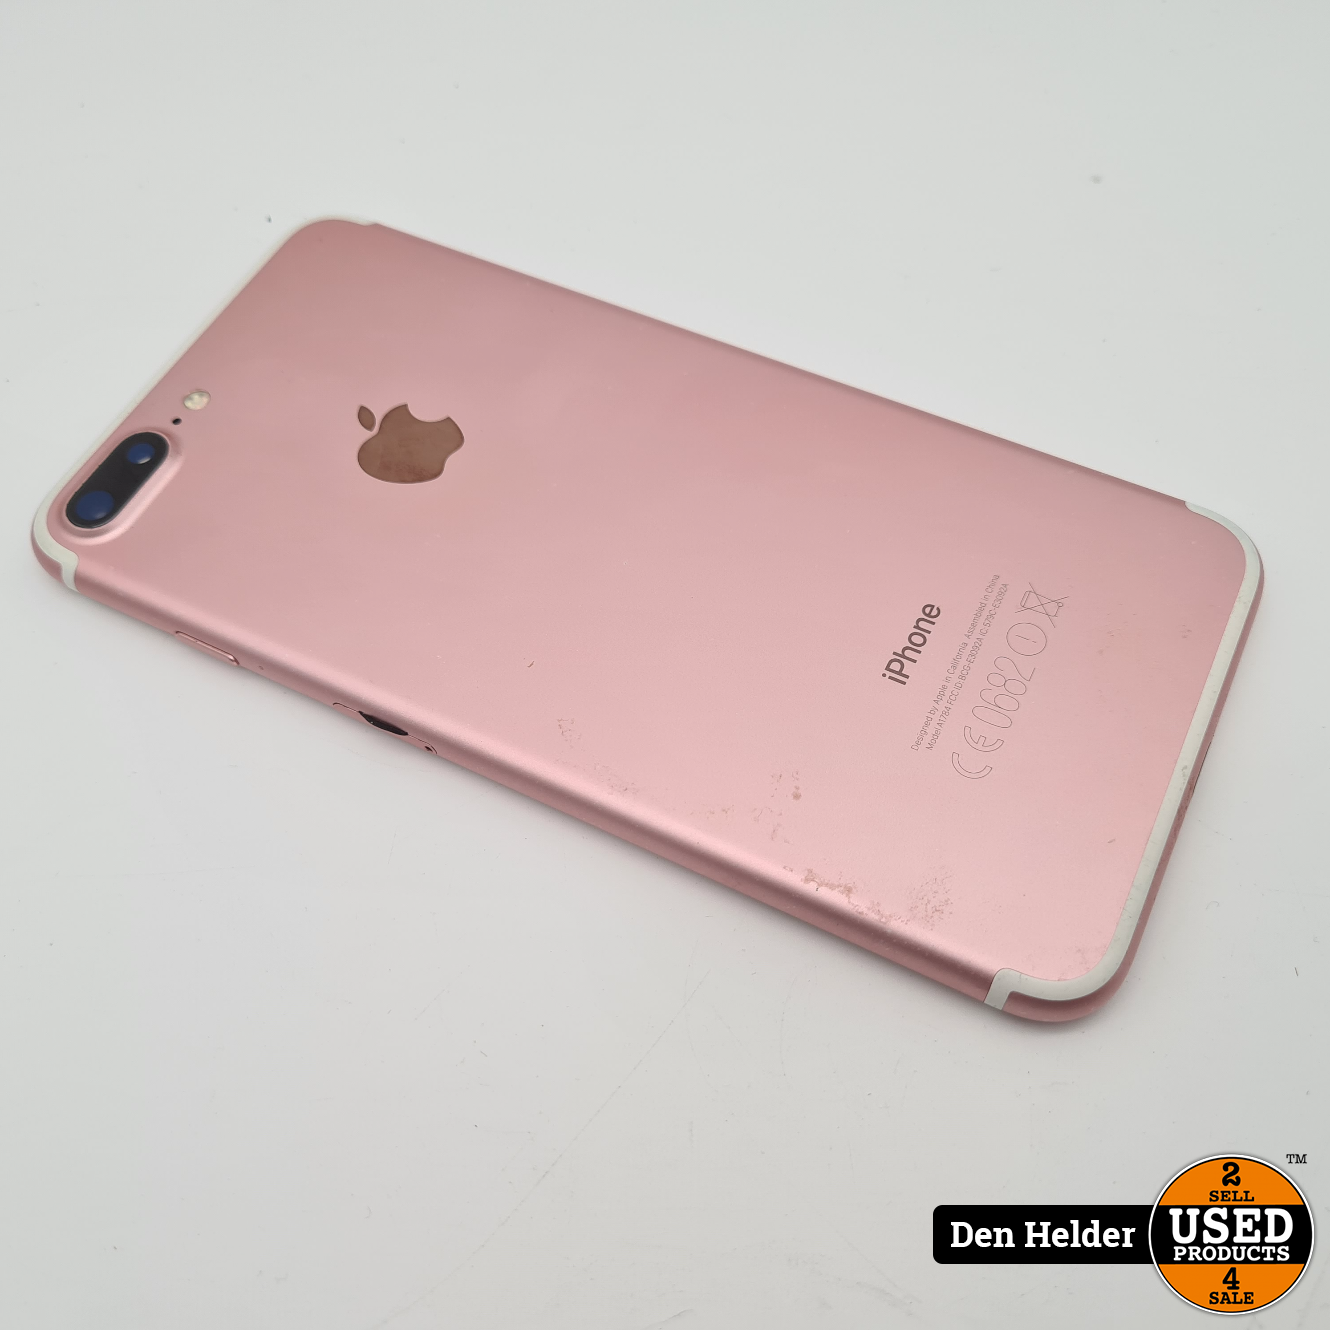 Lucky Destructief Opschudding Apple iPhone 7 Plus 32GB - In Nette Staat - Used Products Den Helder